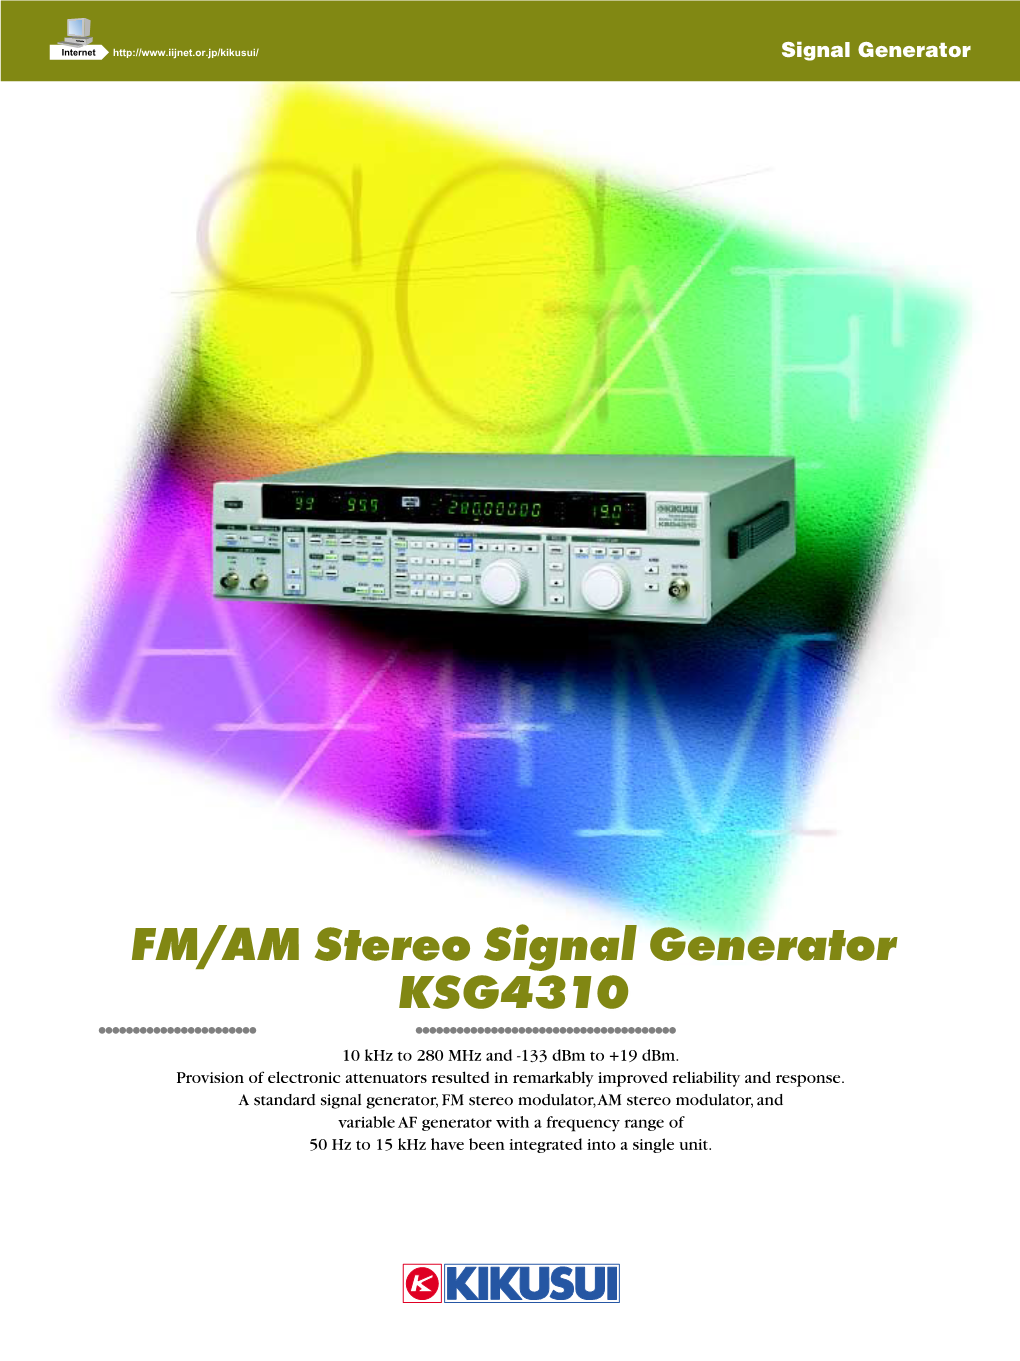 FM/AM Stereo Signal Generator KSG4310